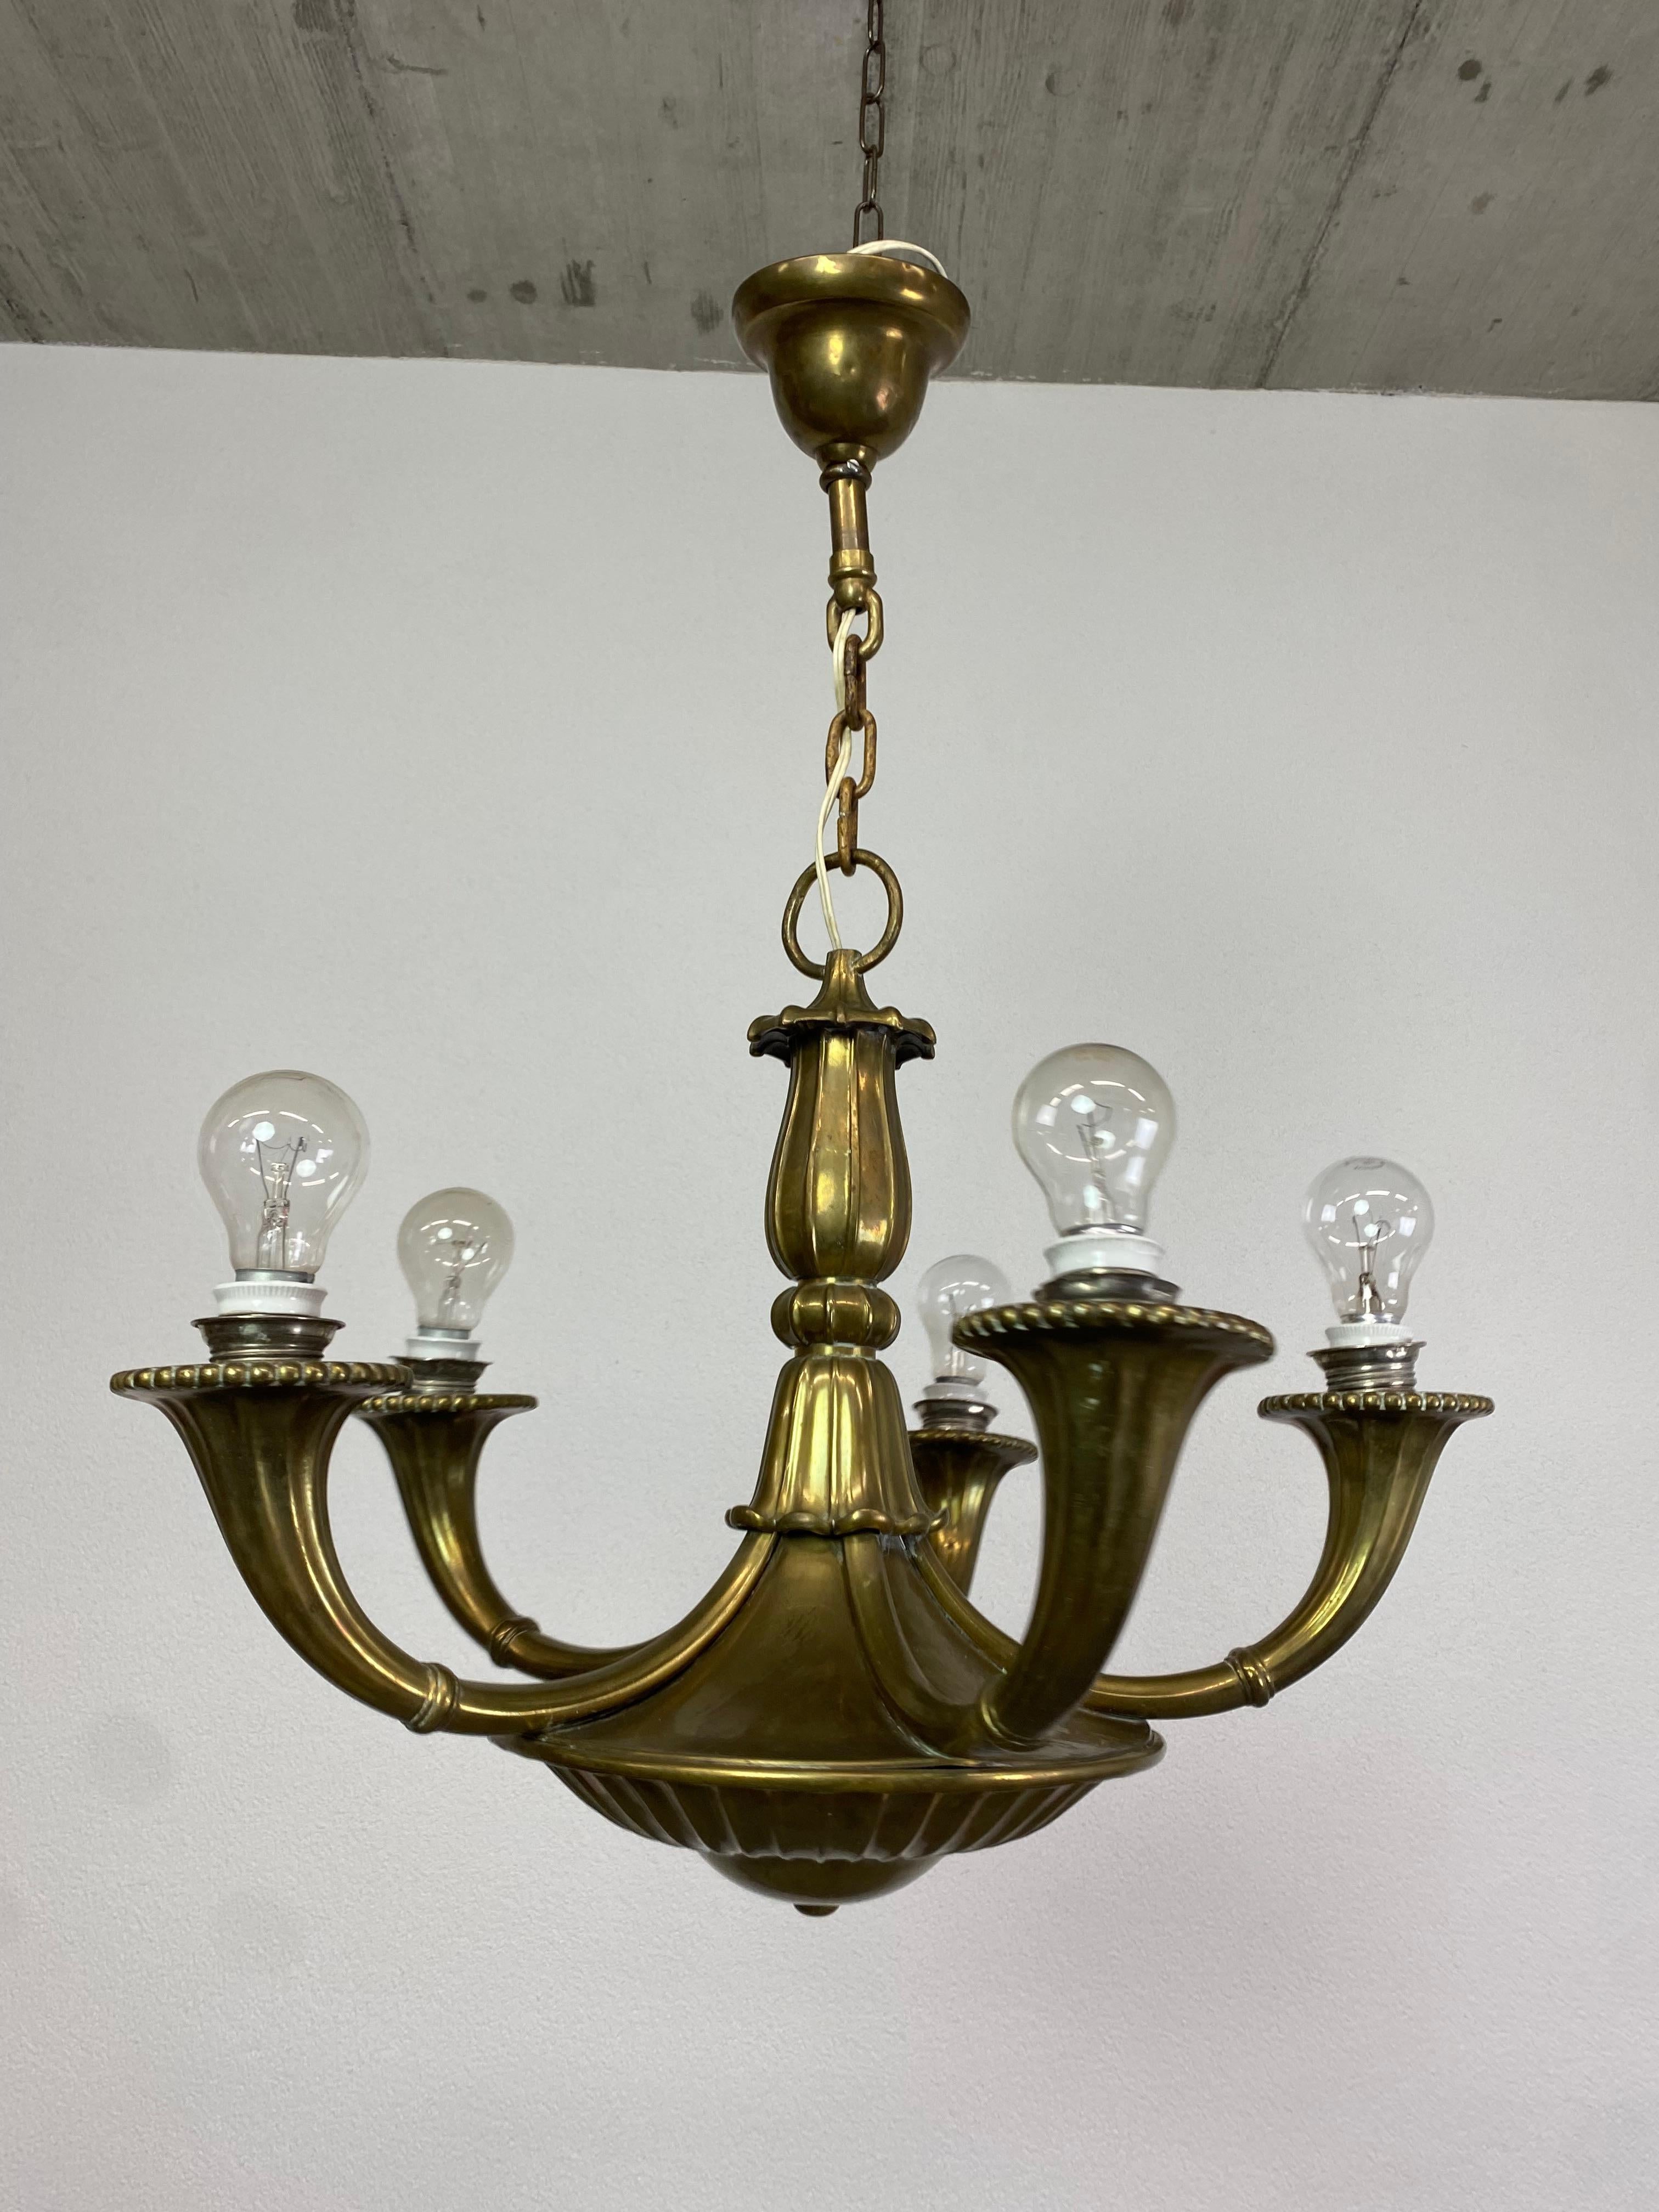 Jugendstil full bronze hanging lamp atr. Dagobert Peche